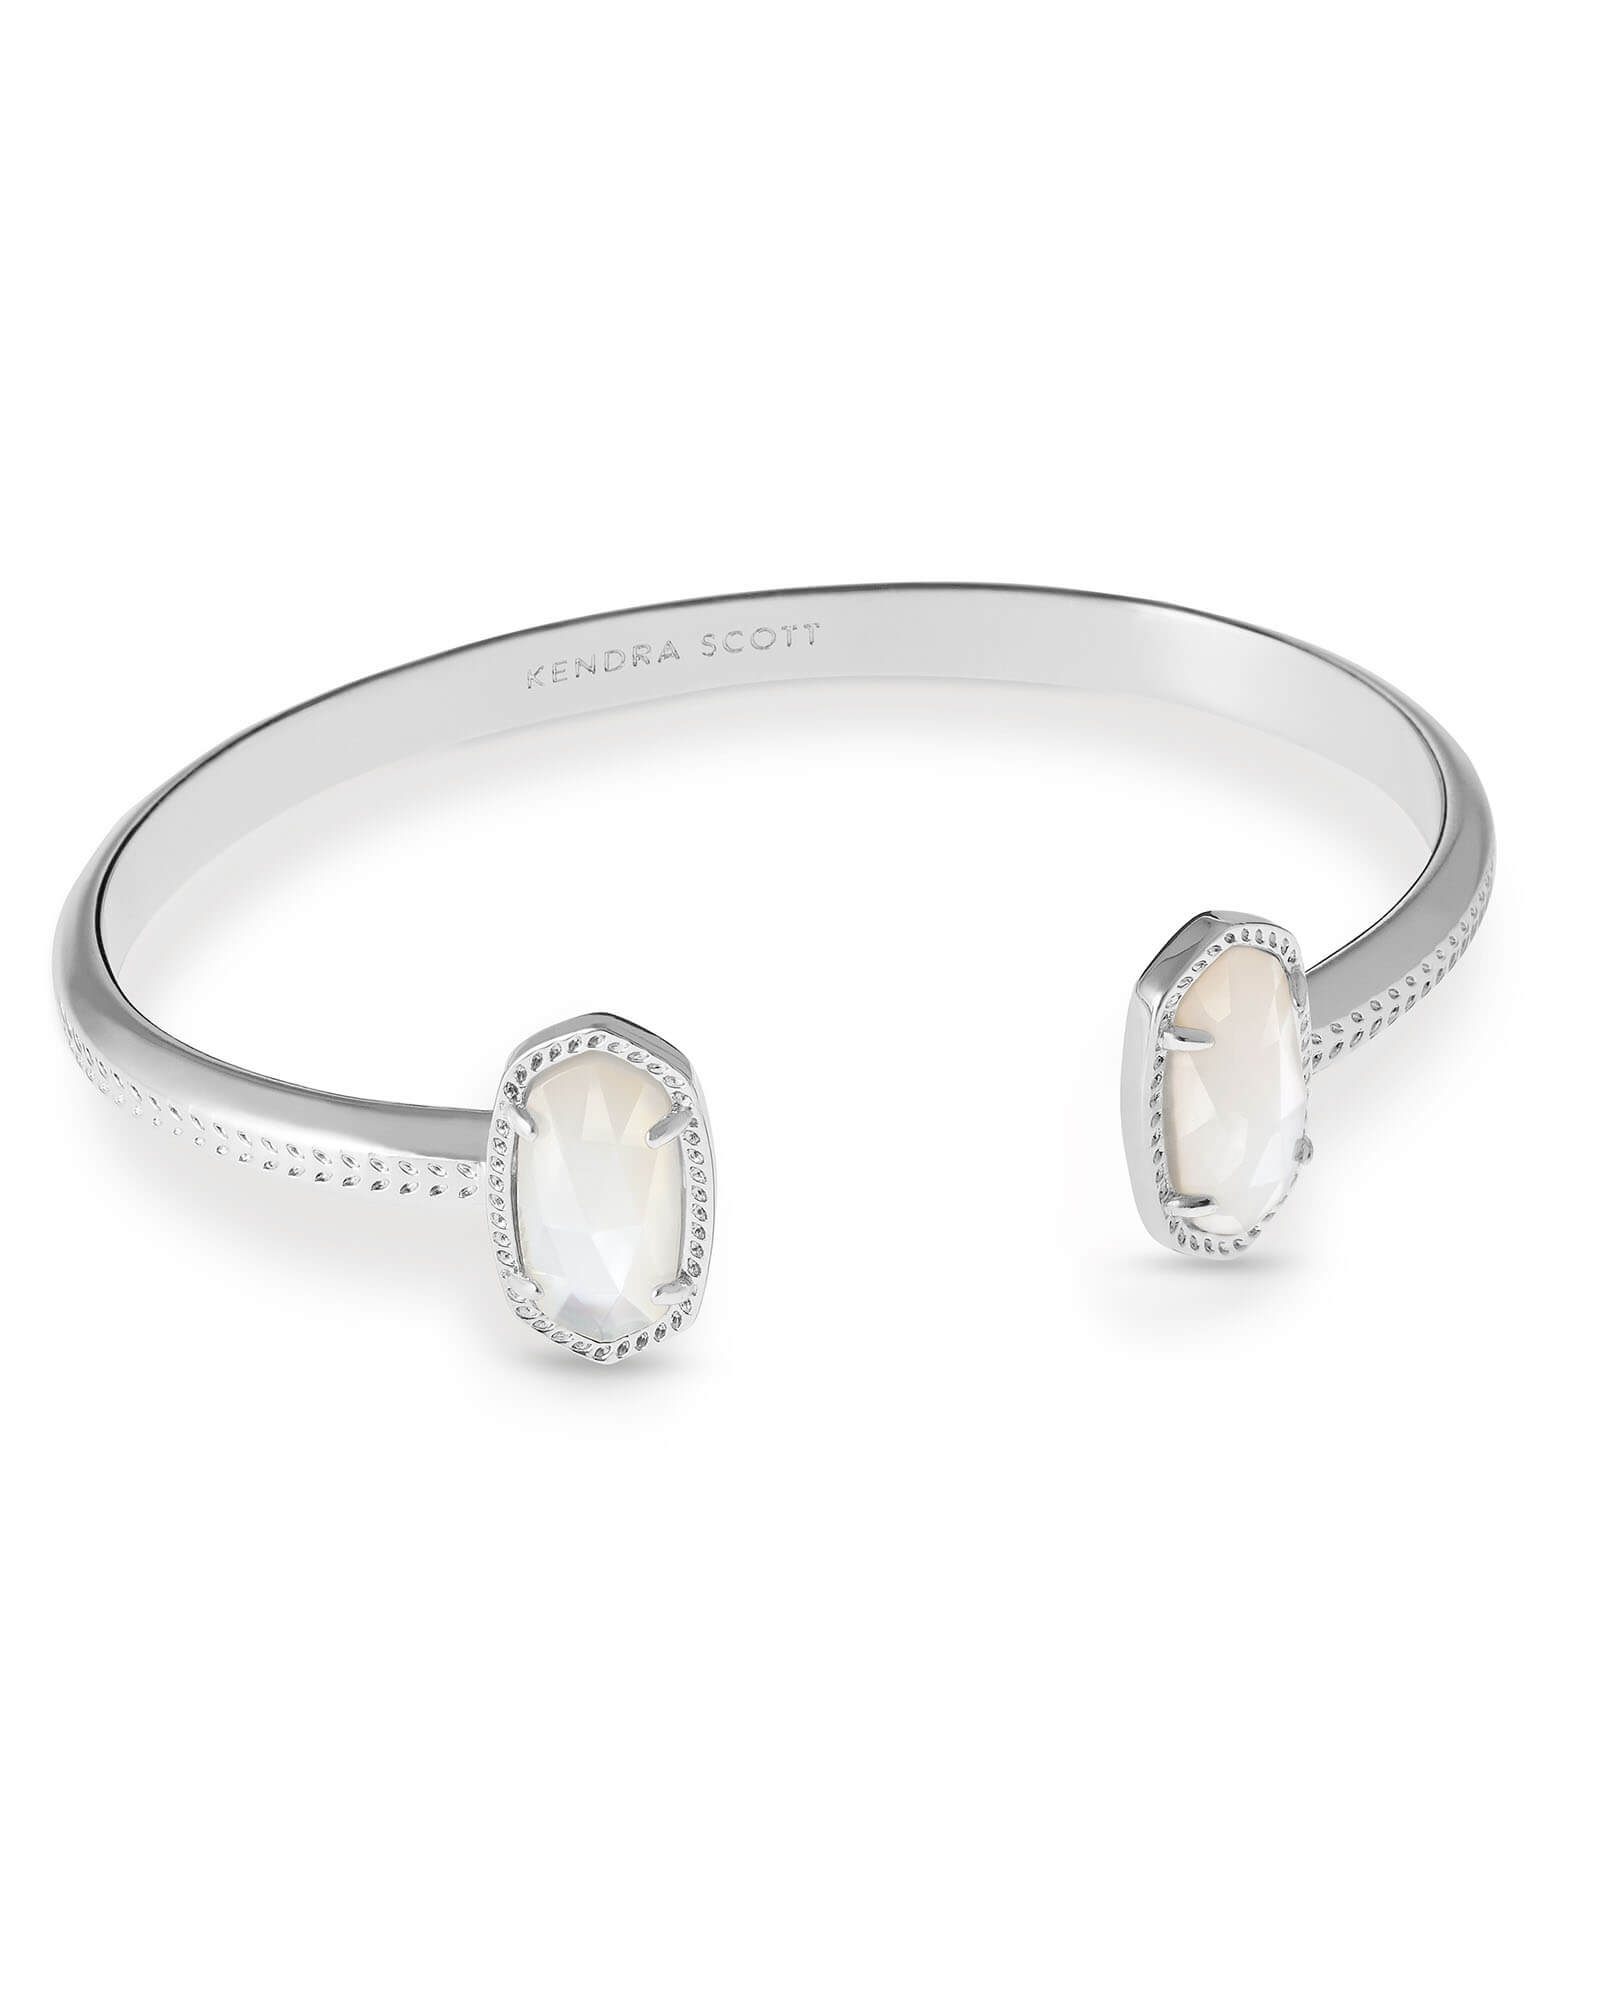 Silver Cuff Bracelet 